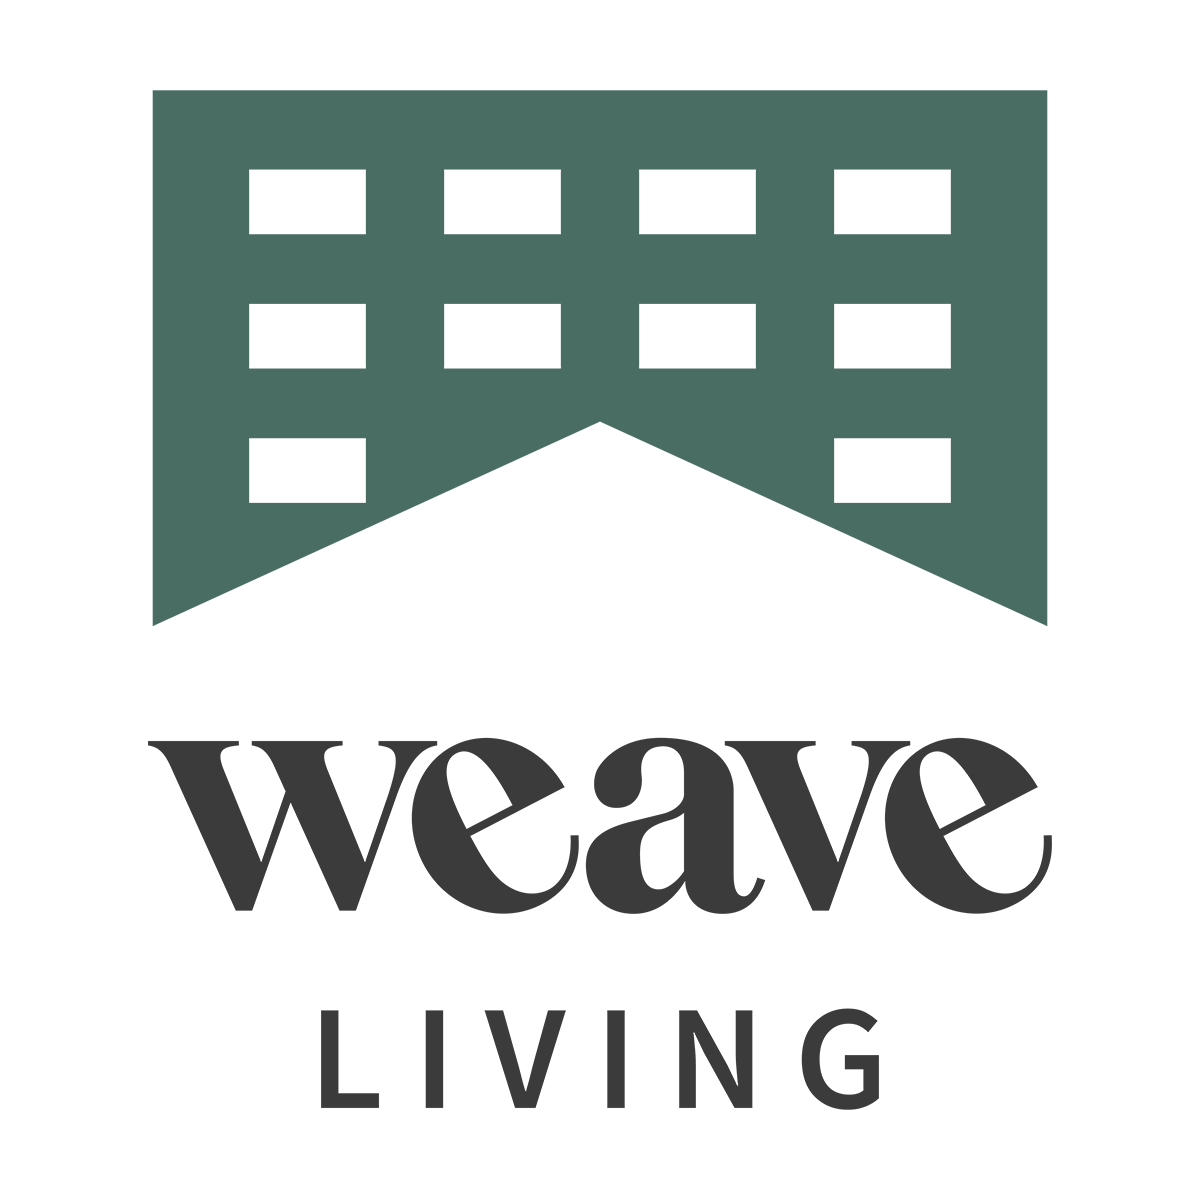 Weave Living"